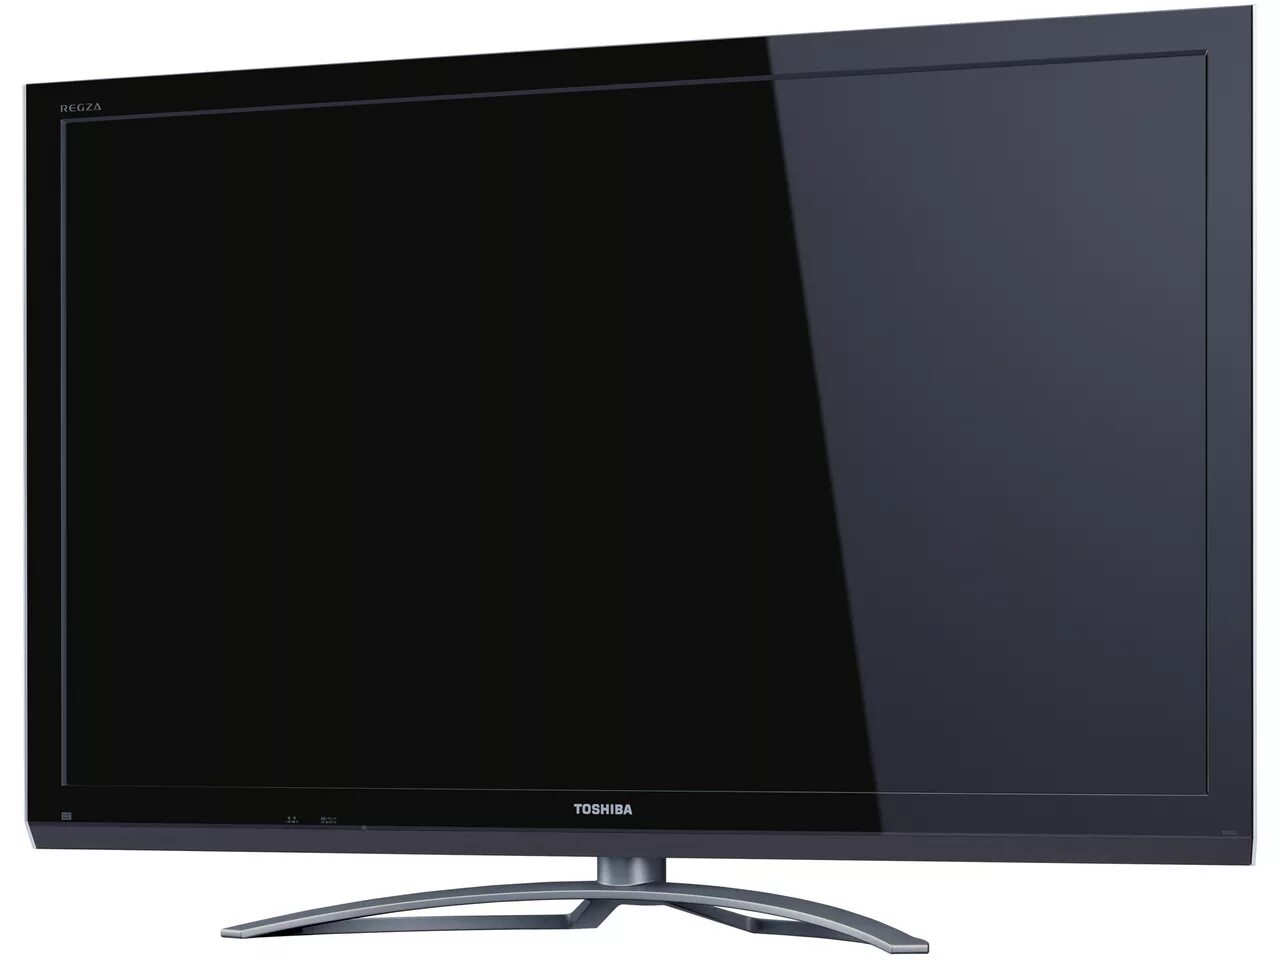 Дешевые телевизоры спб. Toshiba REGZA 42. Samsung 42 дюйма. Дешевый телевизор. Самый дешевый телевизор.